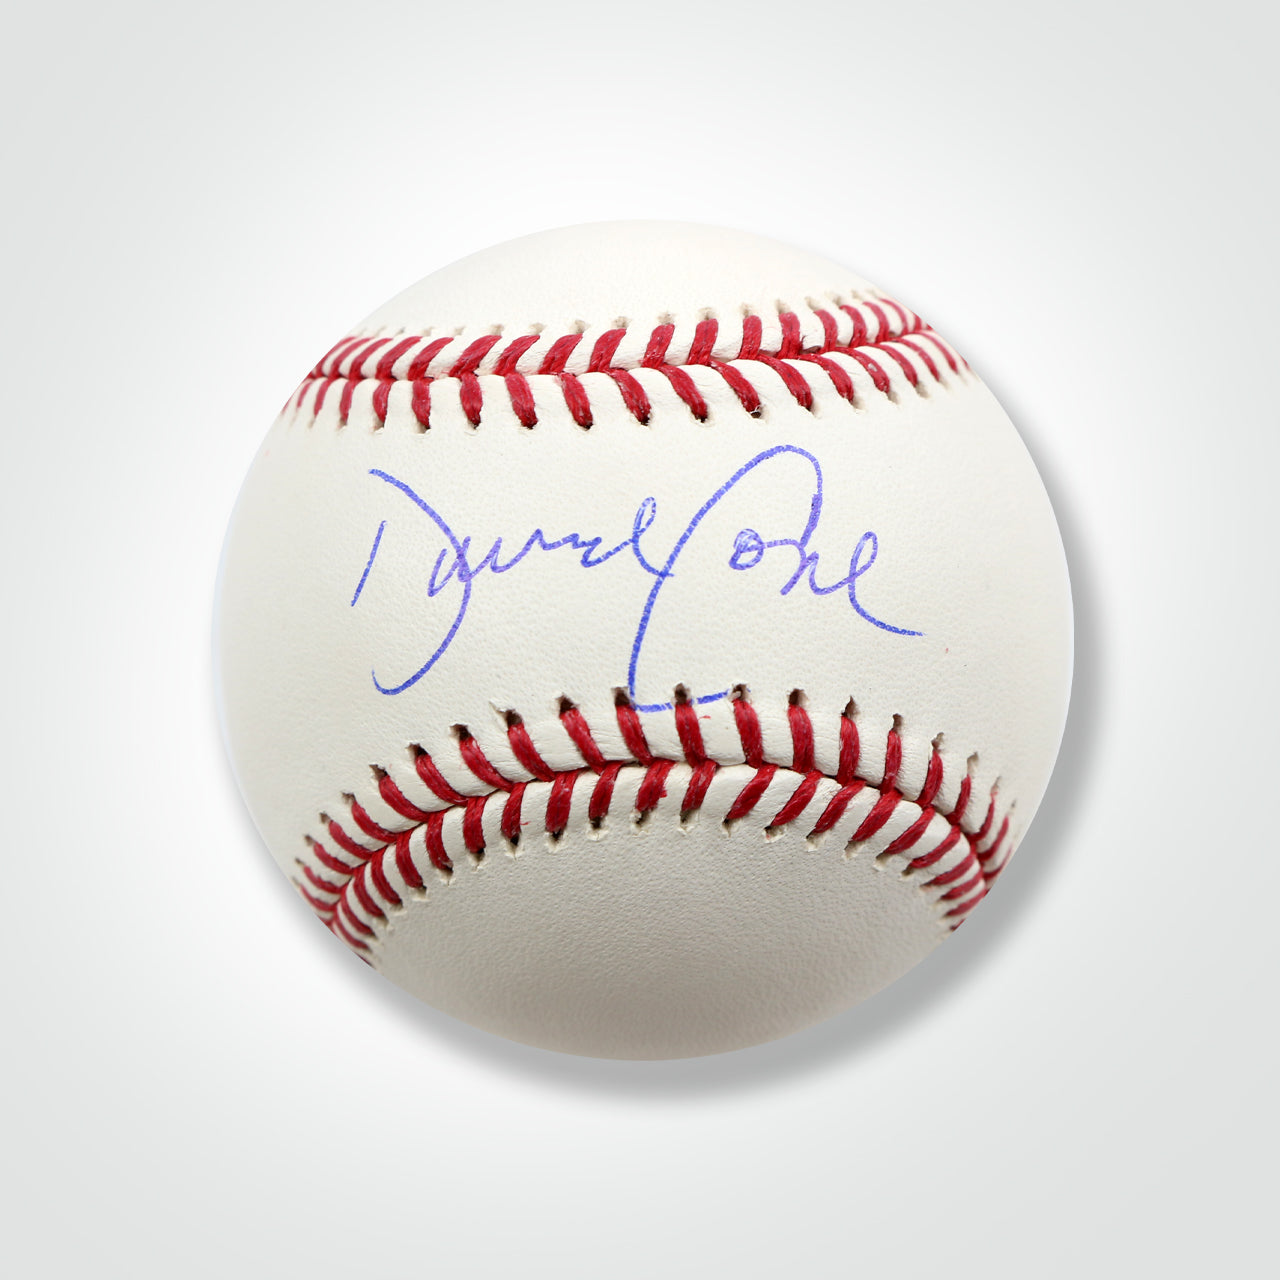 David Cone Signed Official Major League Baseball